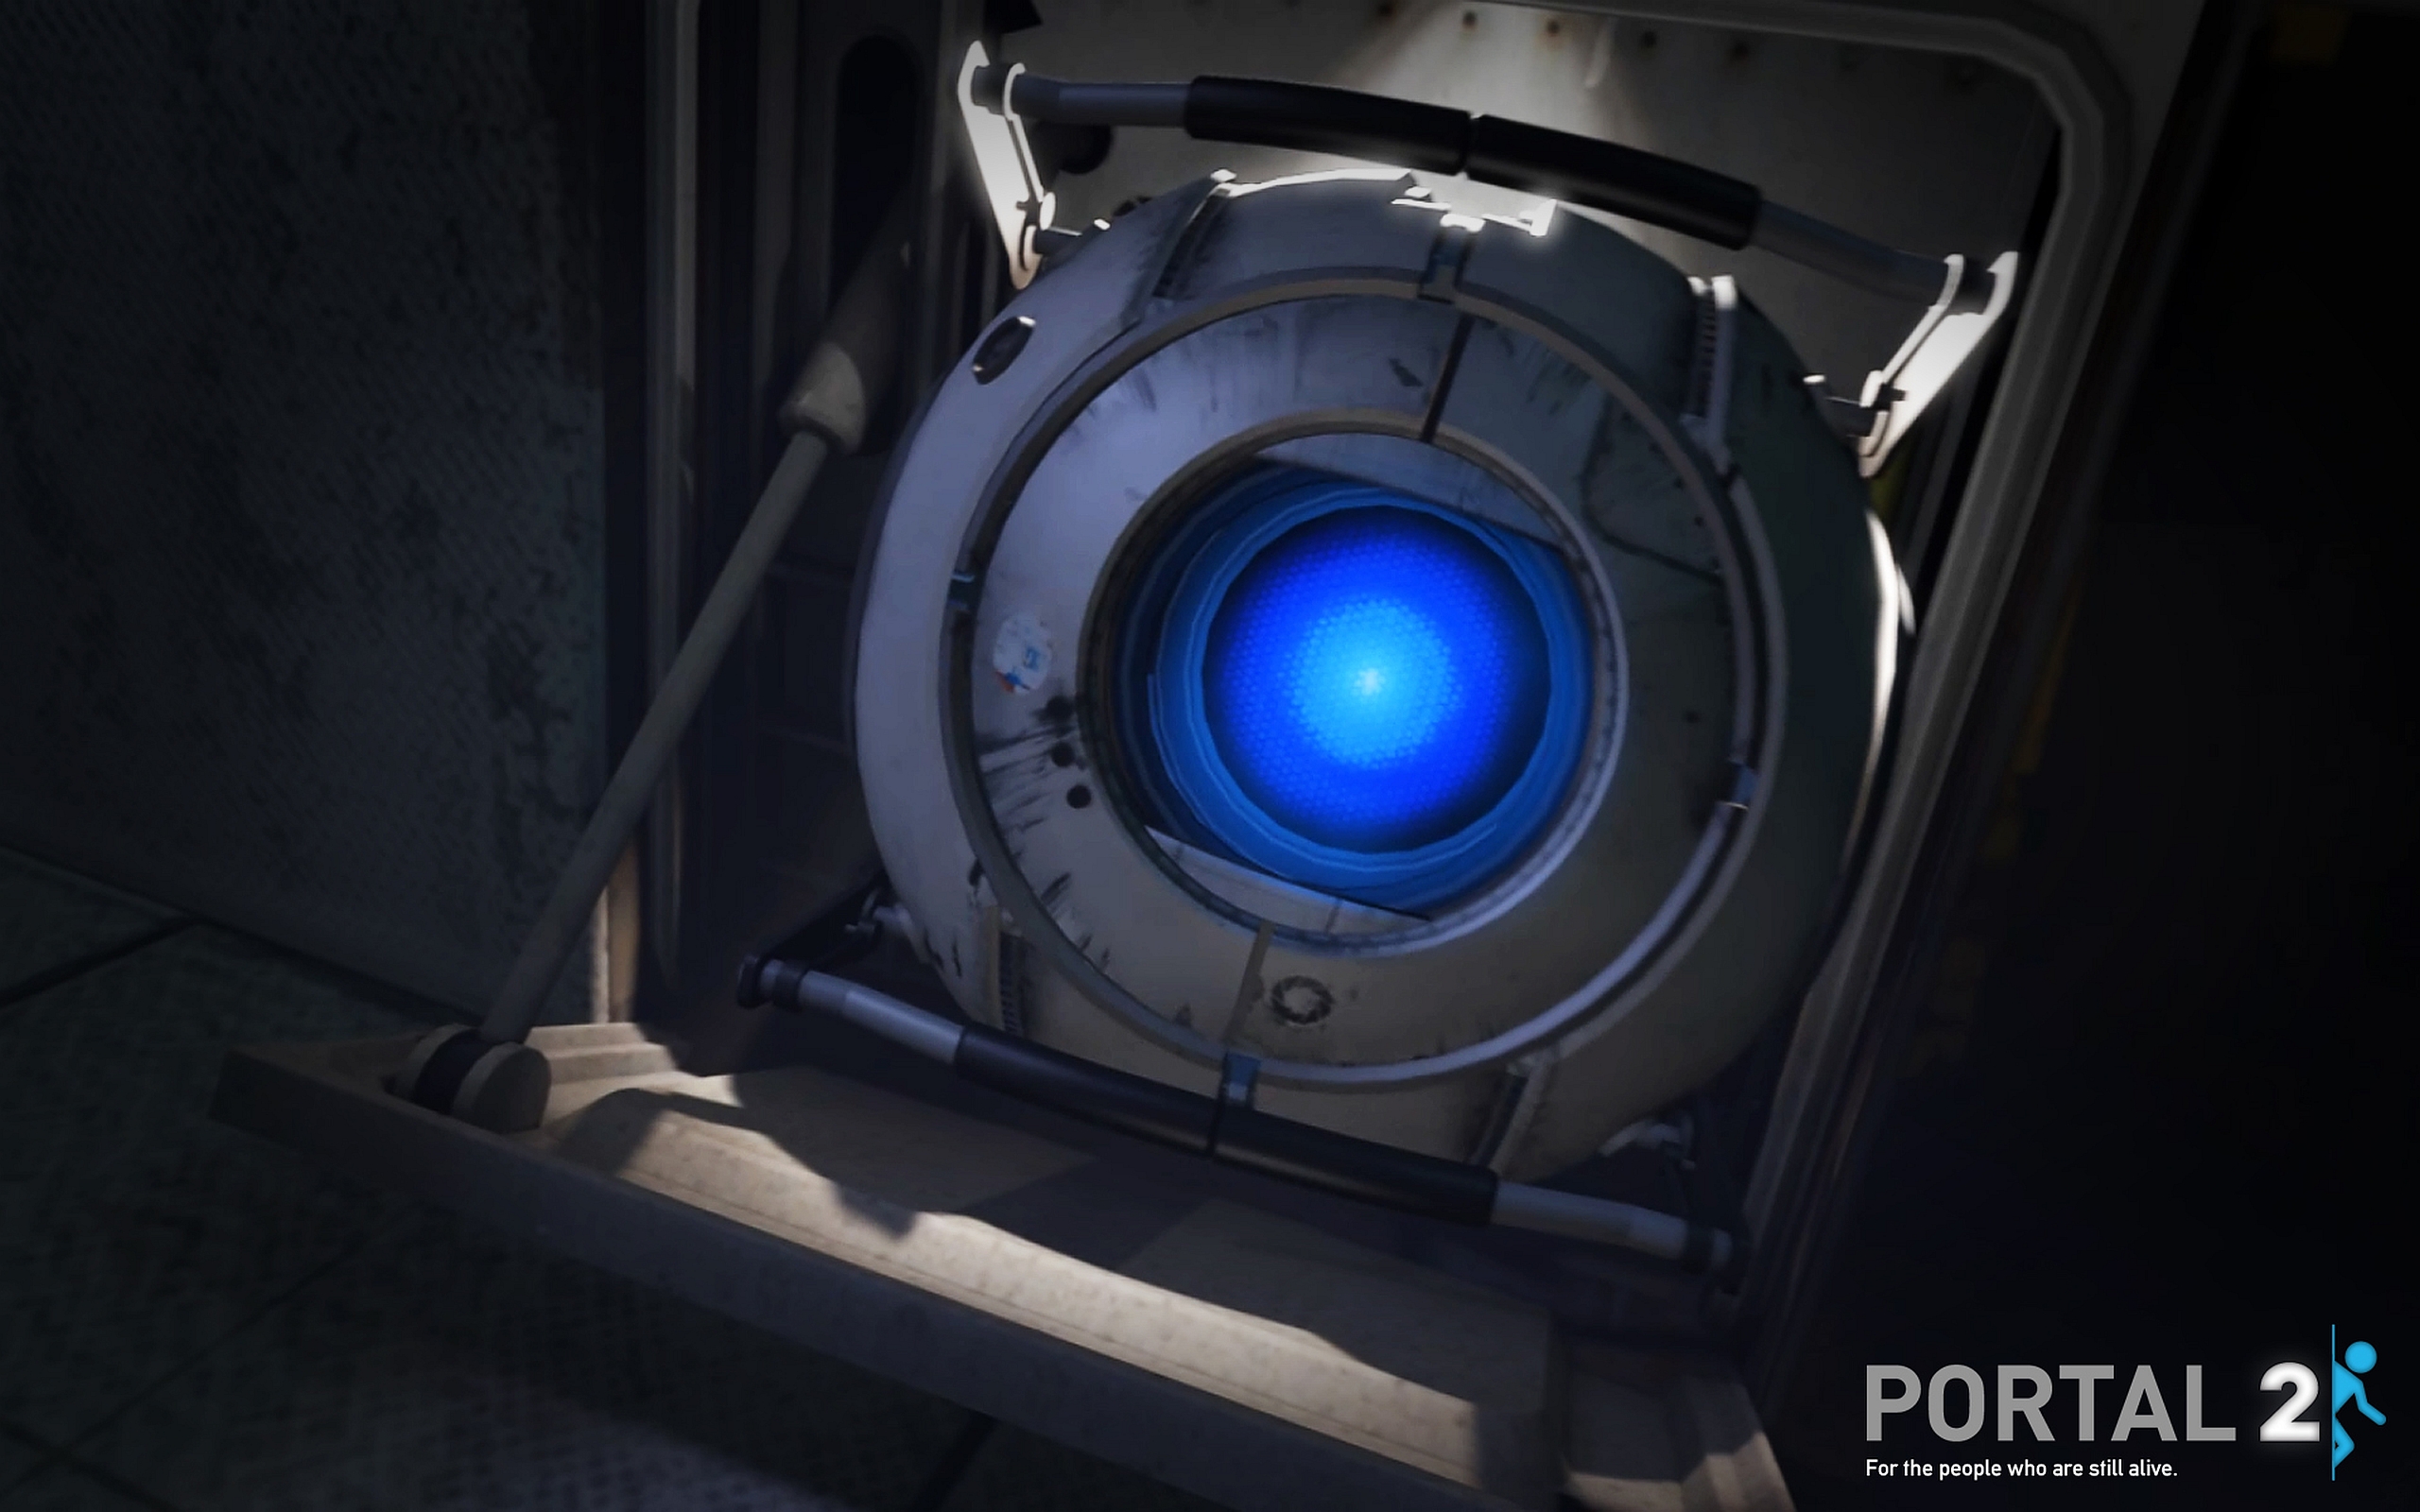 Portal 2 final. Модуль Уитли. Портал 2 Уитли. Уитли Portal 2 игрушка. Модуль Уитли из Portal 2.